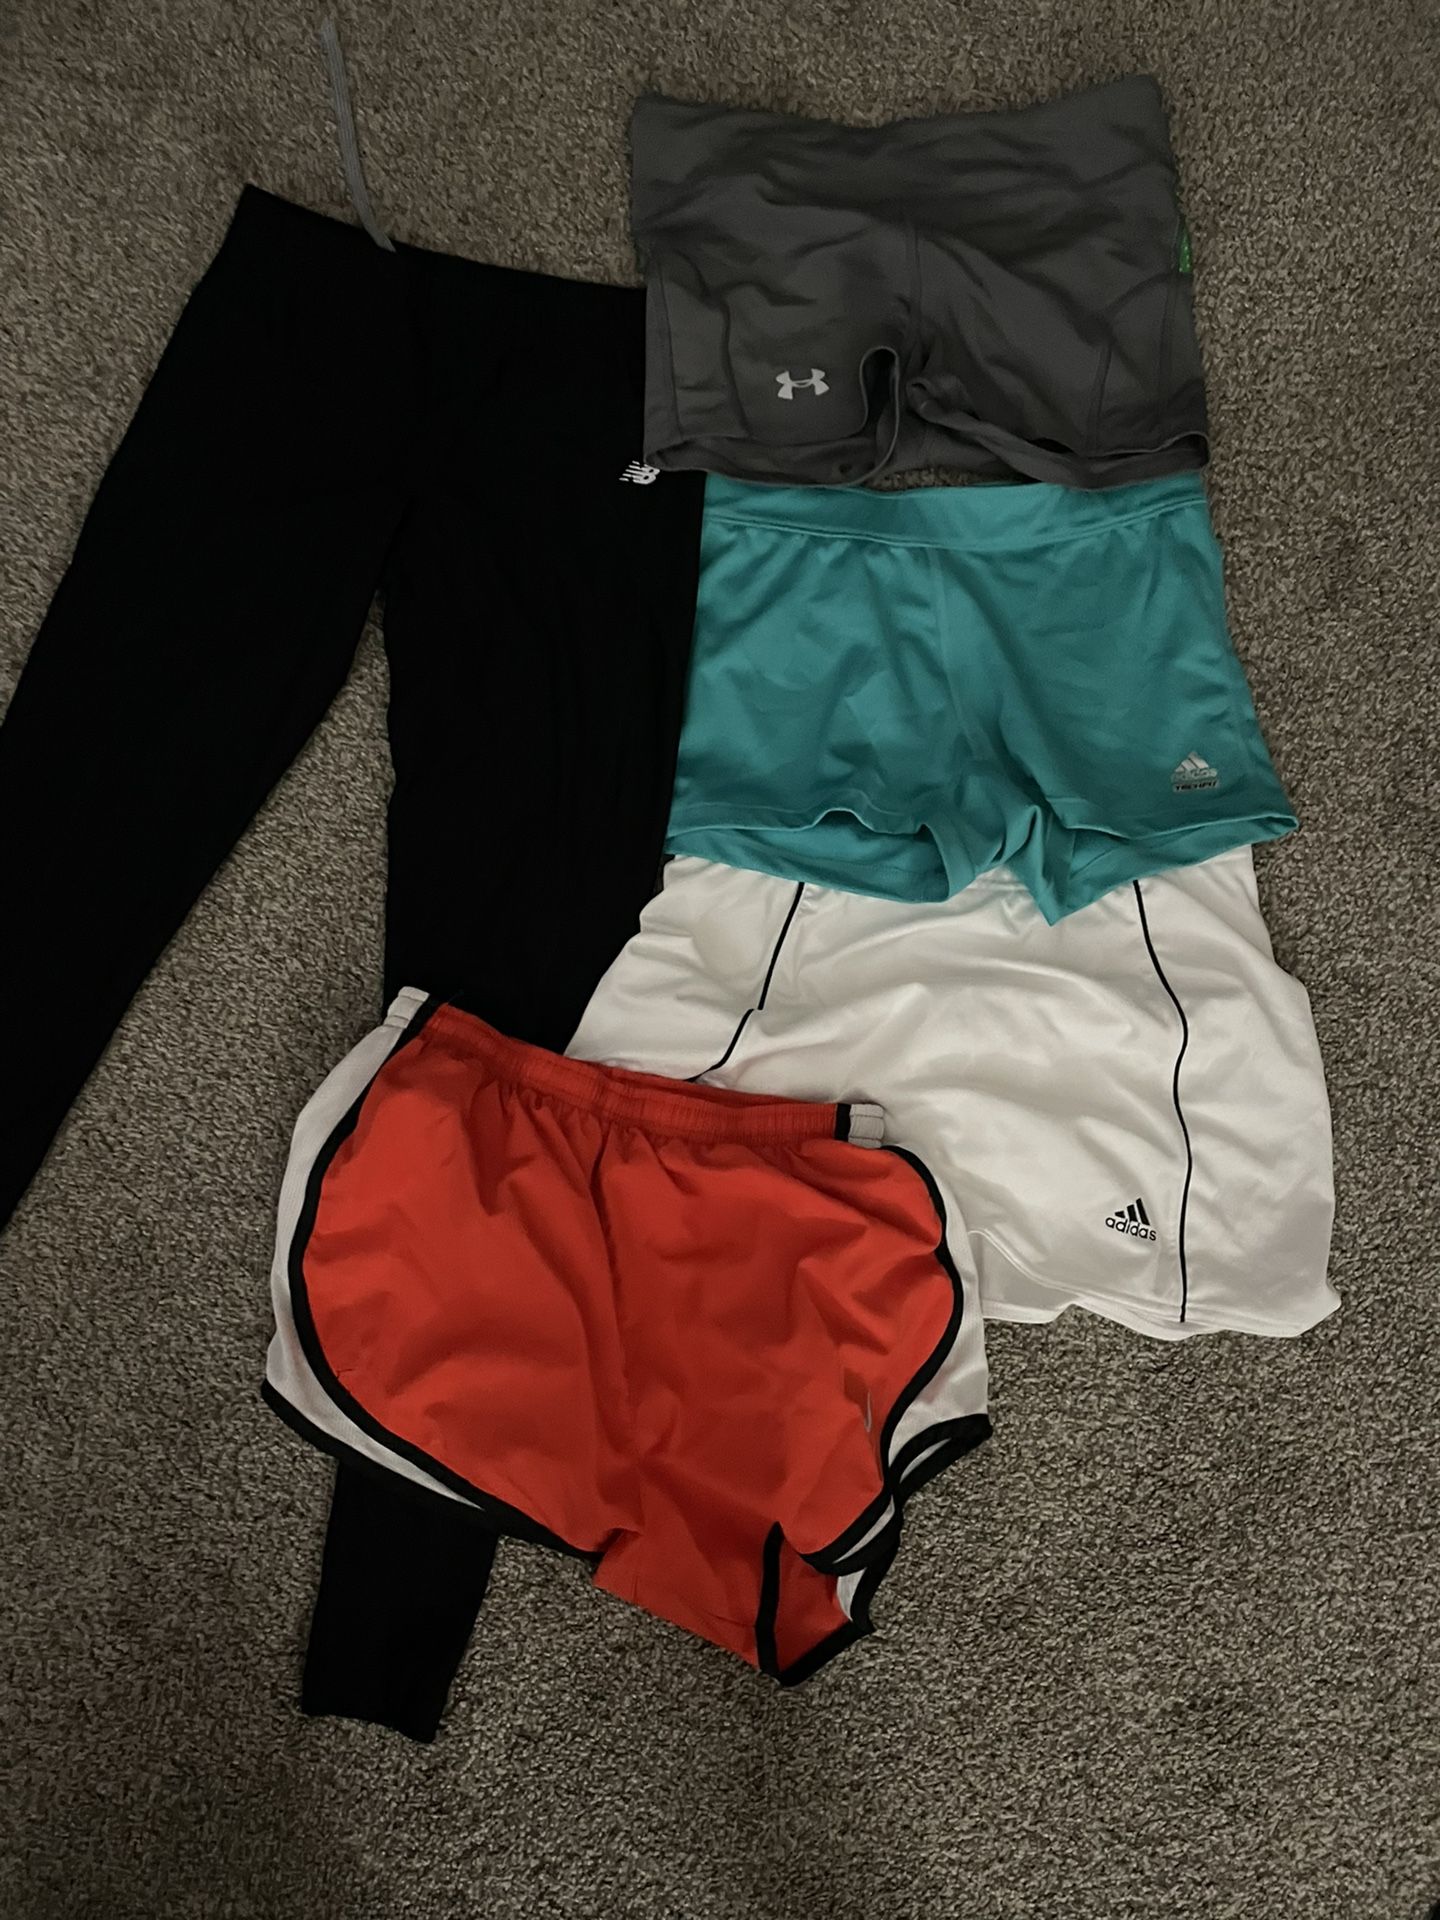 Workout Clothes